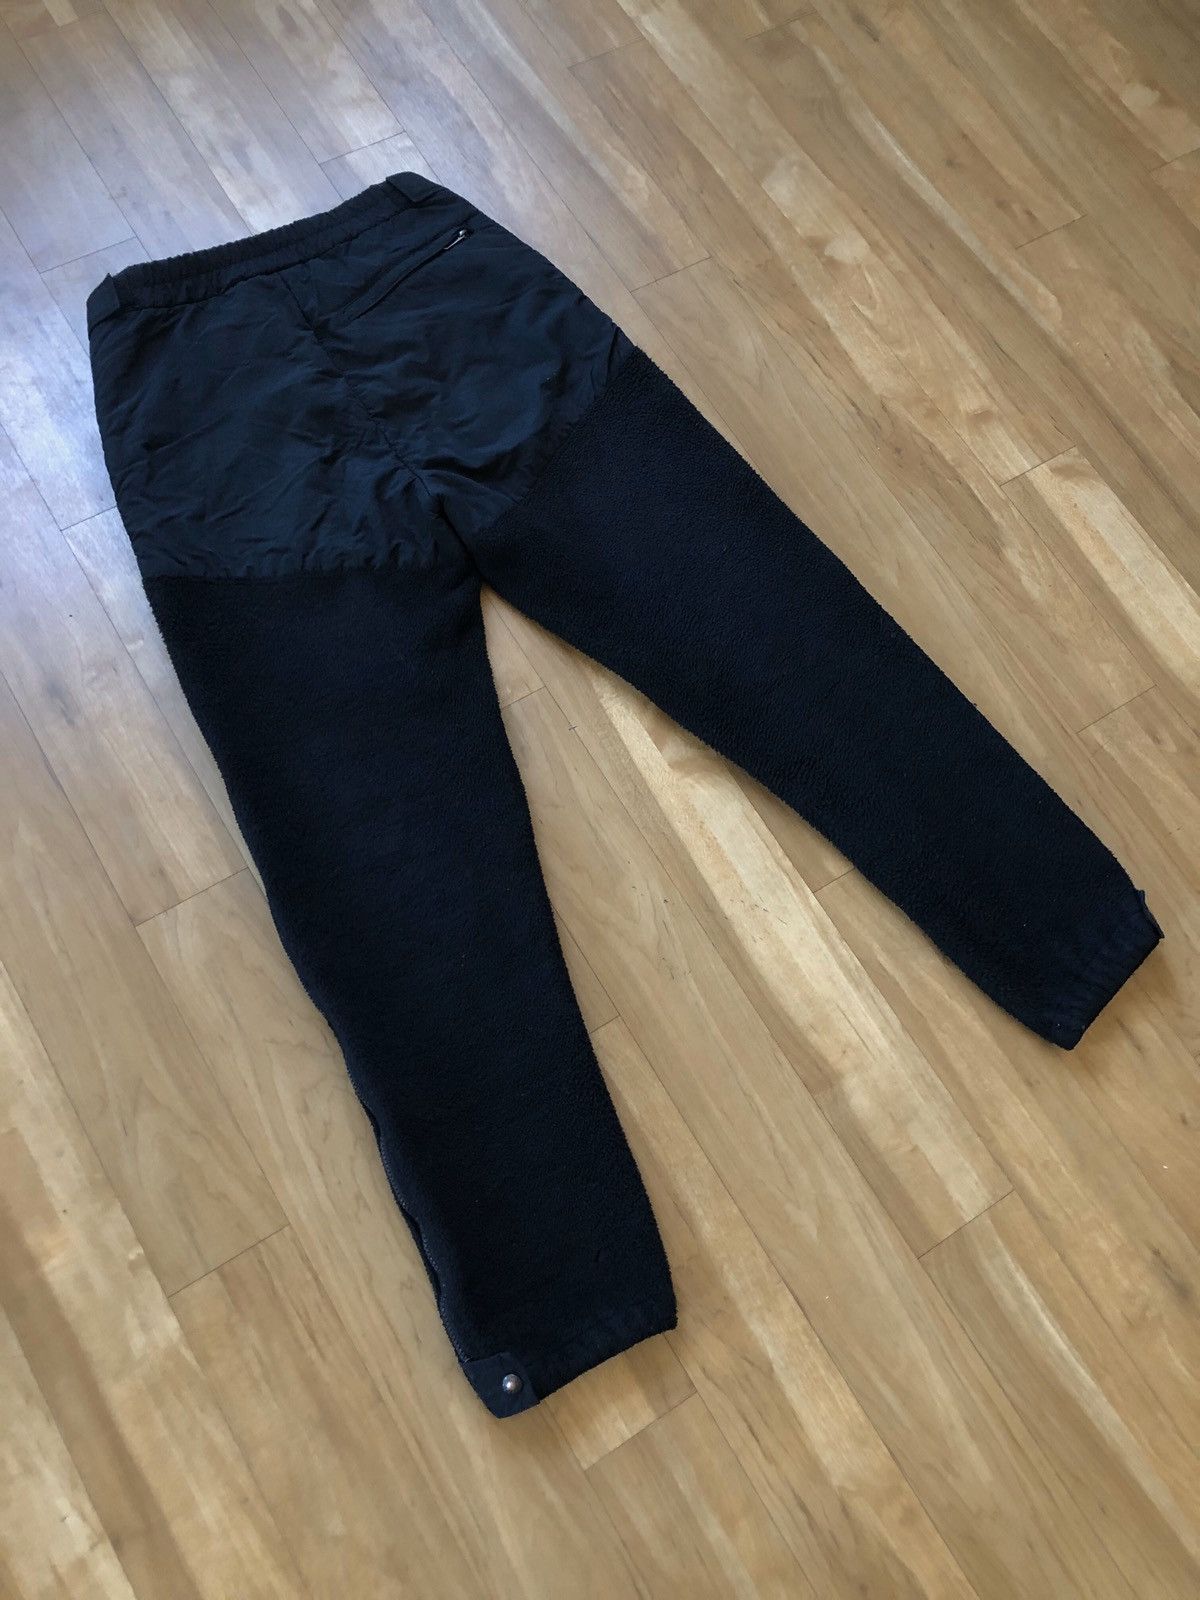 The North Face The North Face Vintage Denali Fleece Pants Black Medium 90’s Size US 30 / EU 46 - 7 Preview